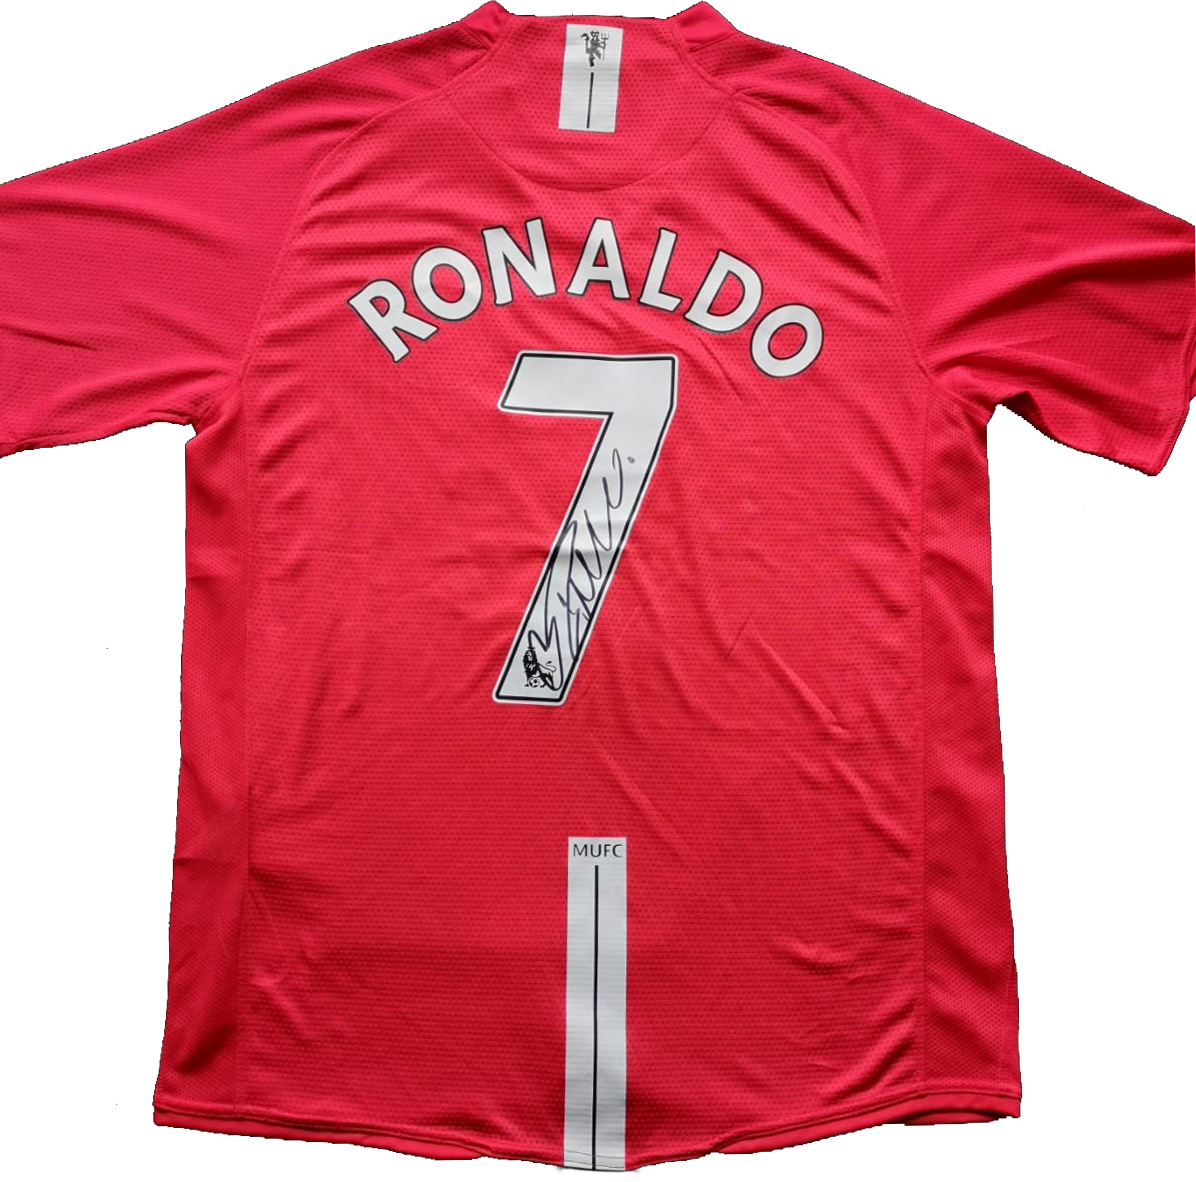 2008 ronaldo manchester united jersey